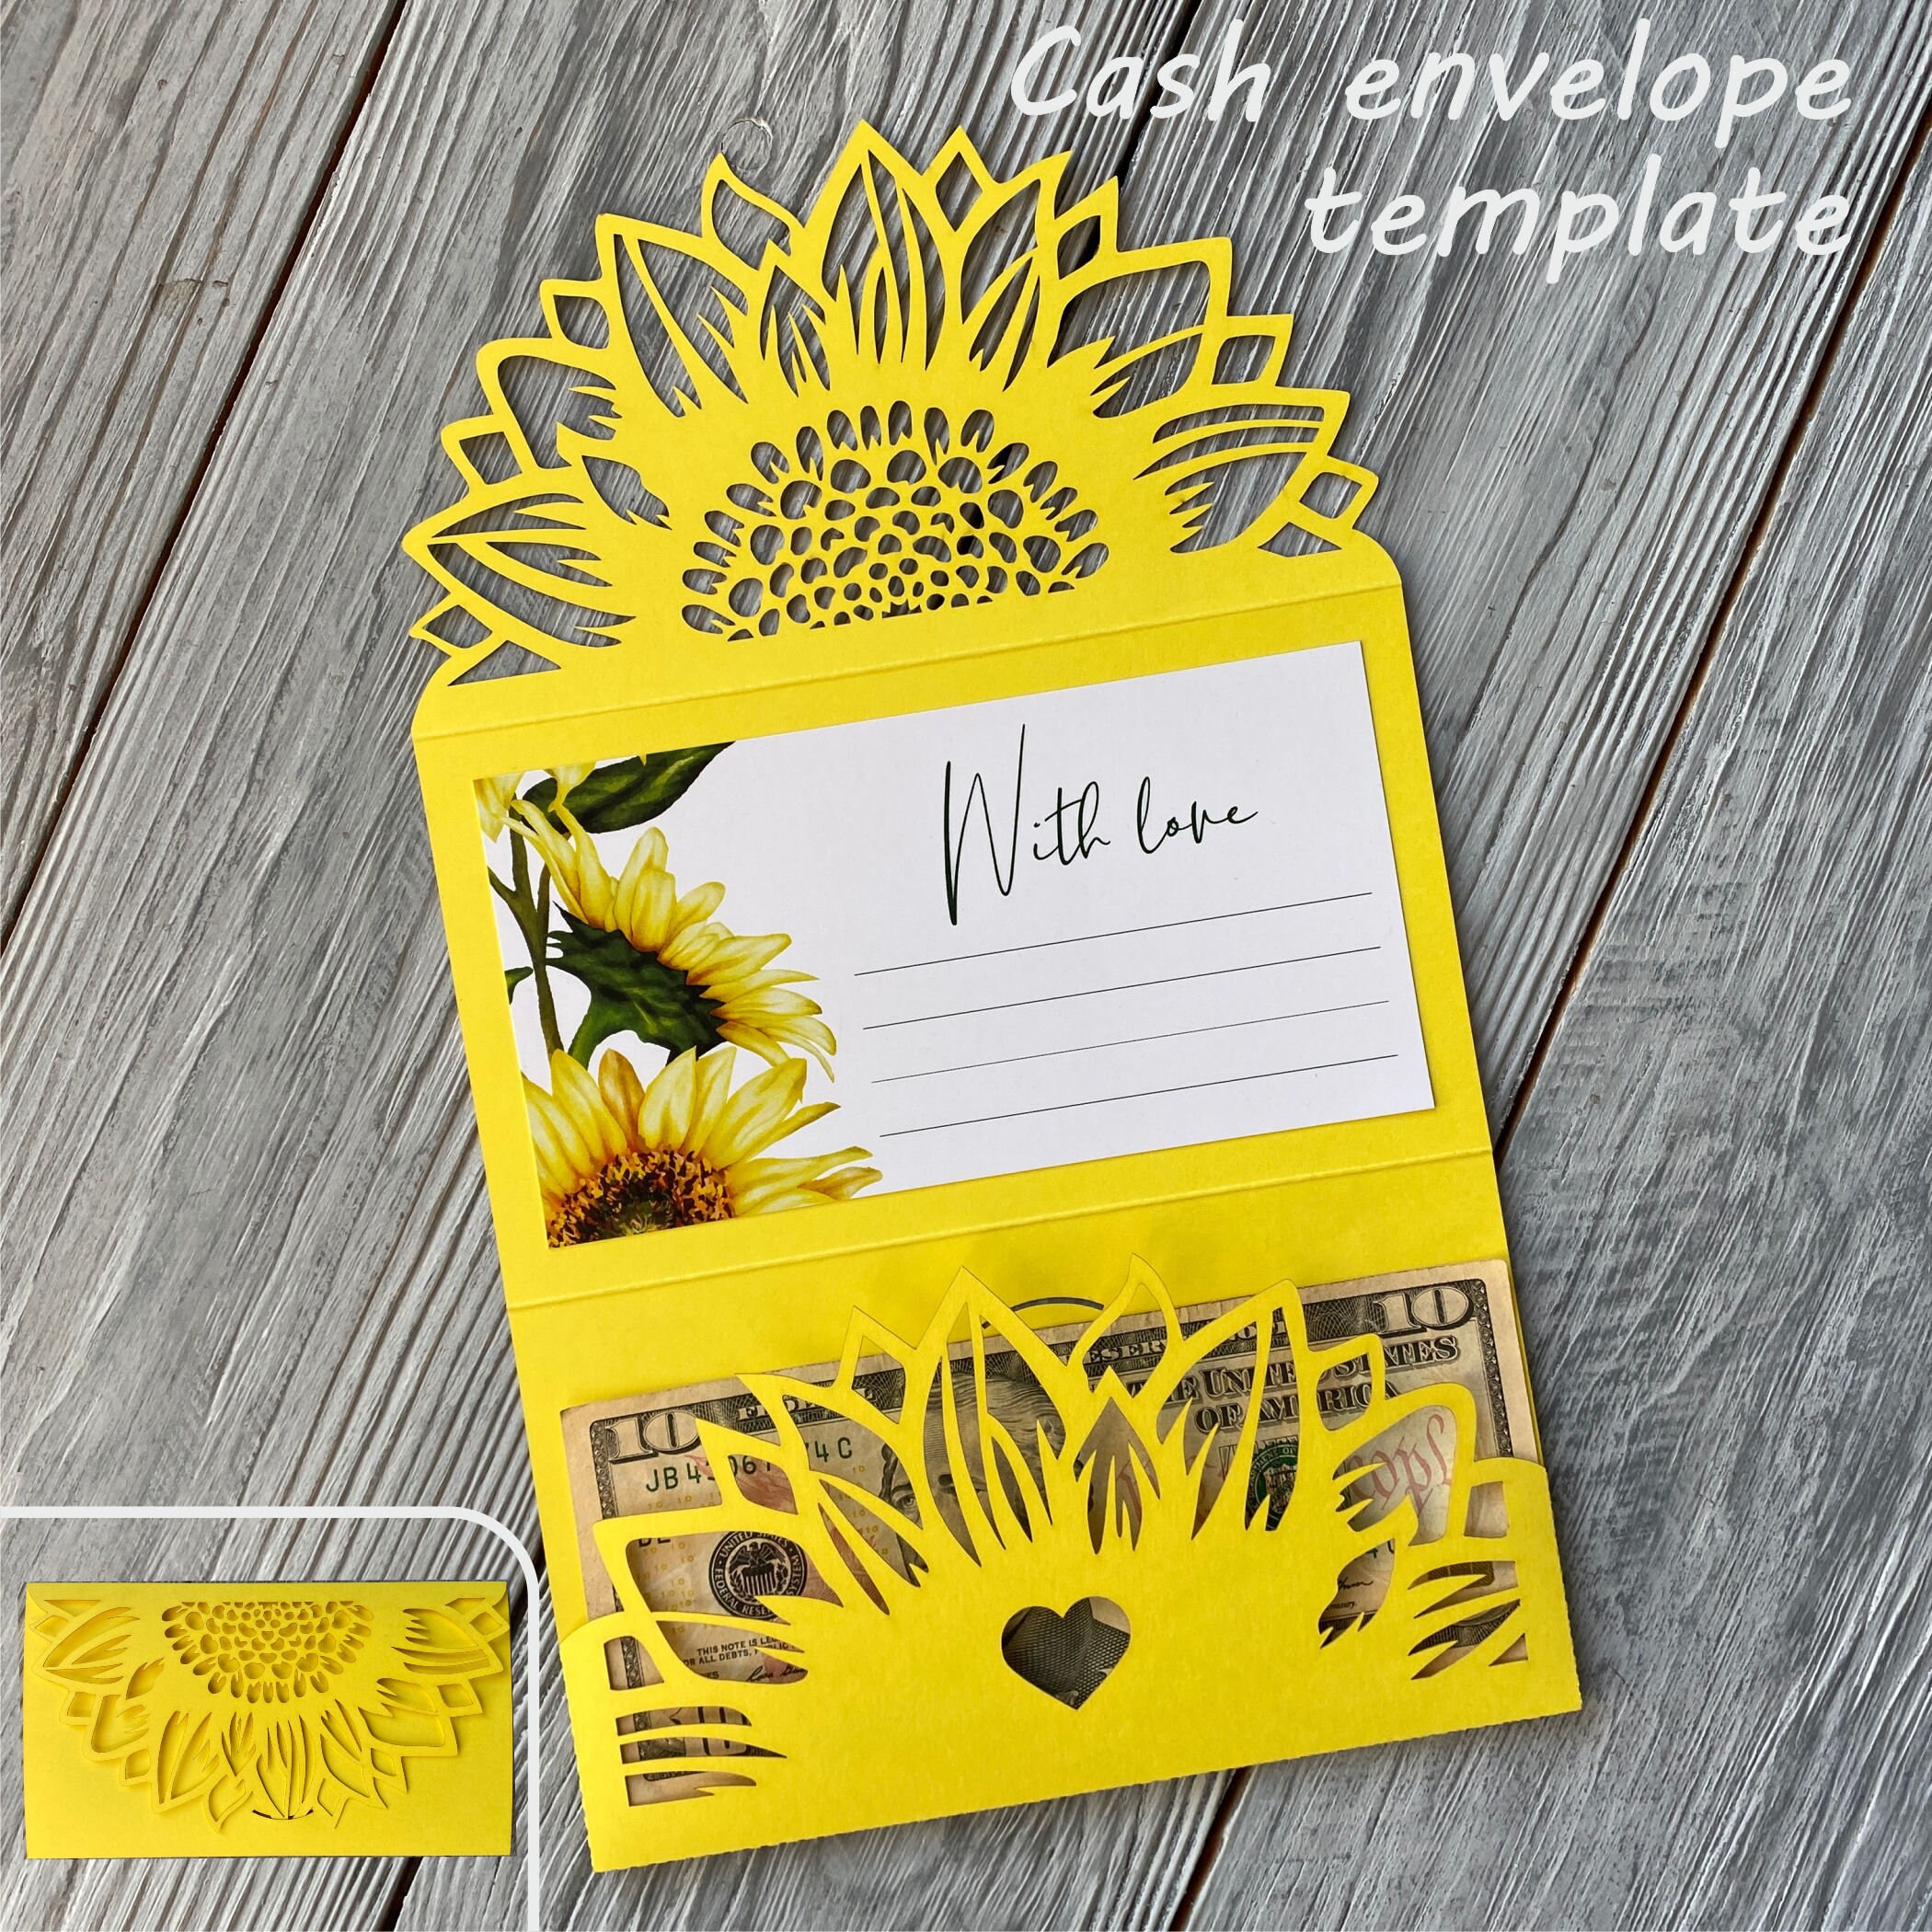 Birthday card svg, Sunflower card svg, sunflower paper cut svg, Cricut  card, cut out cards svg, laser cut file, papercut svg, cards uk - So Fontsy